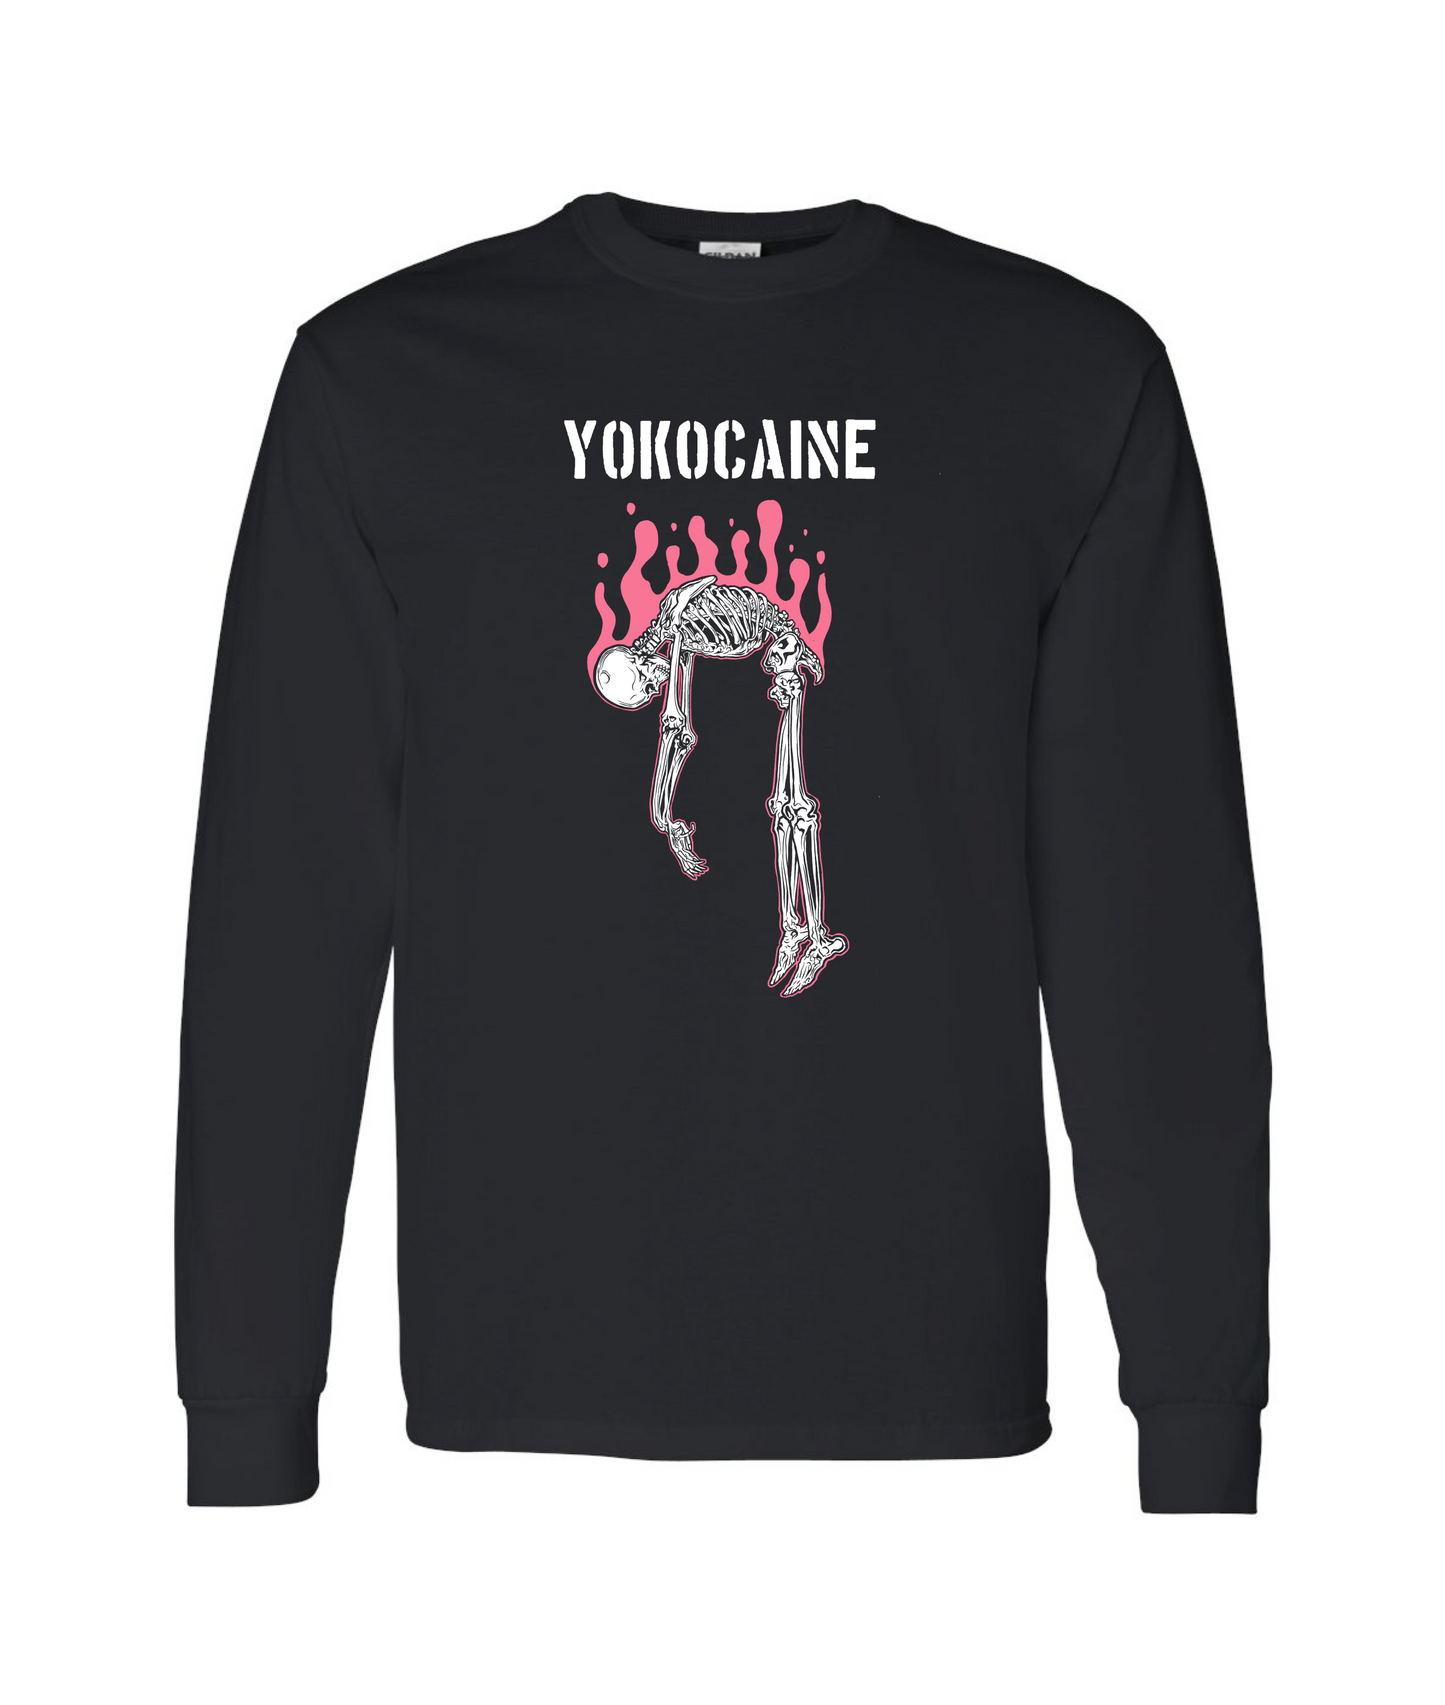 Yokocaine - Skeleton  - Black Long Sleeve T